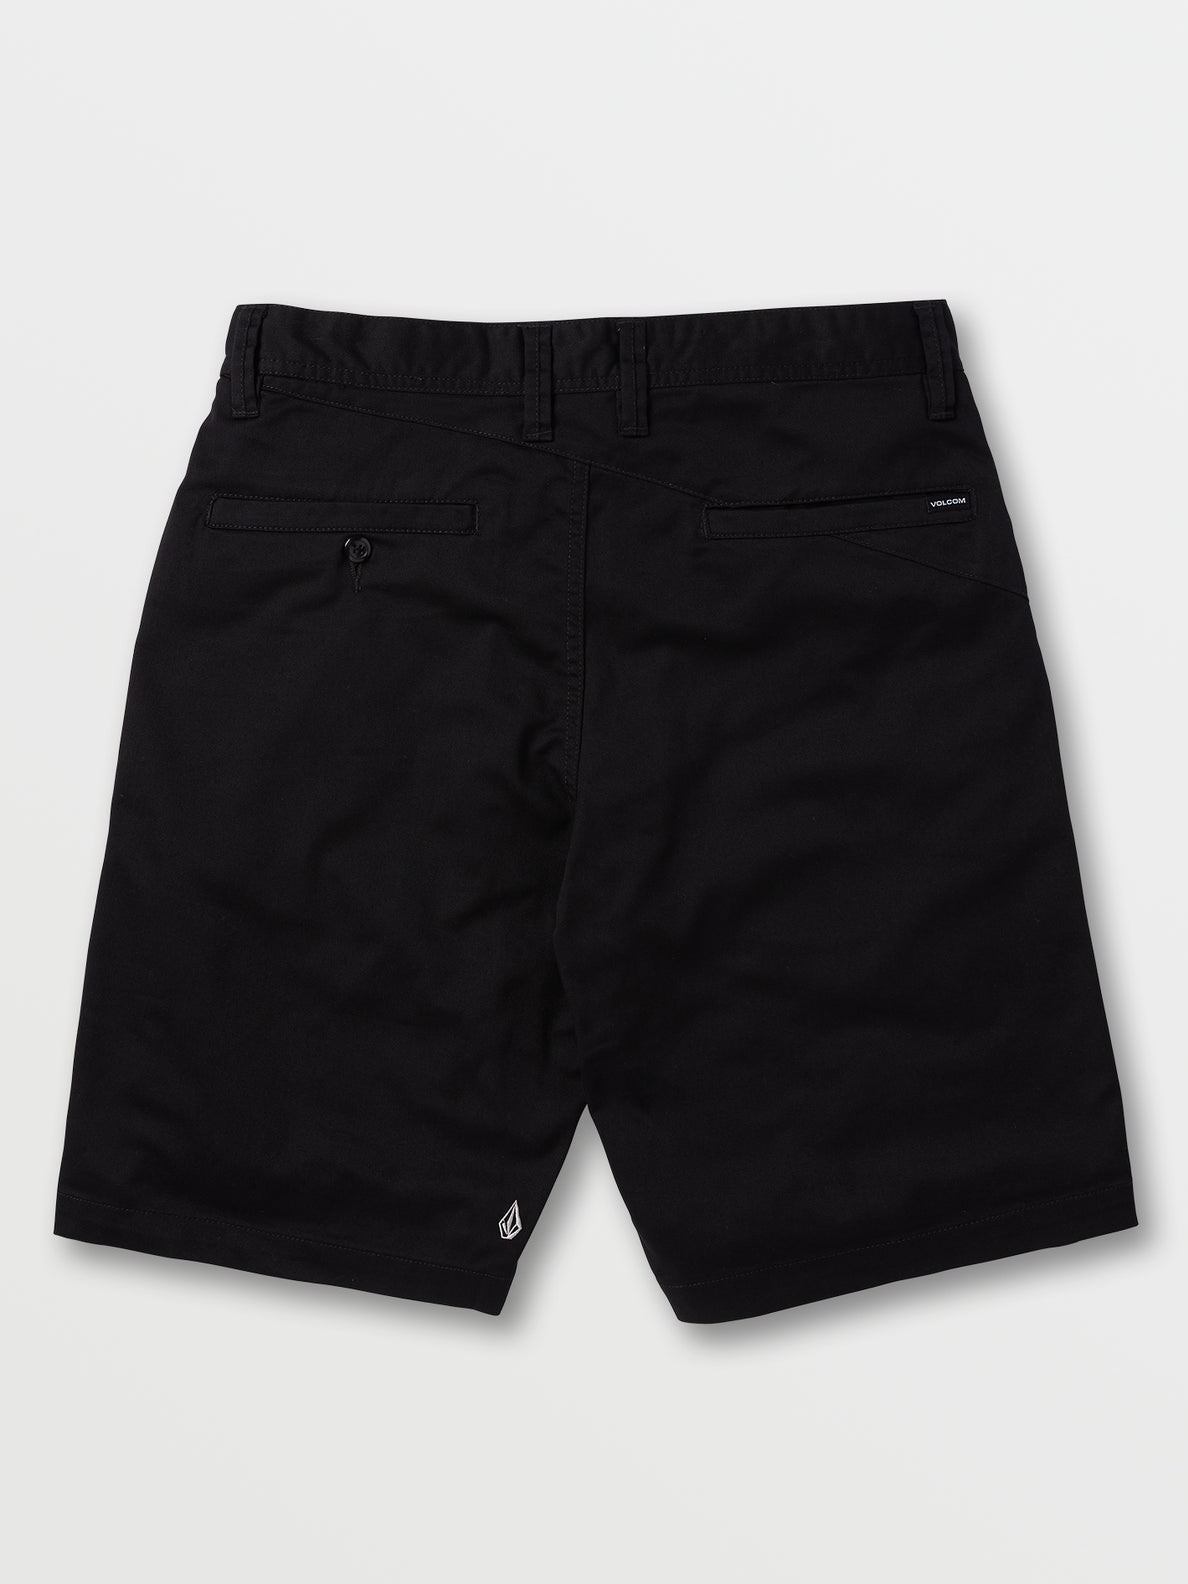 Frickin Chino Shorts - Black (A0911600_BLK) [B]